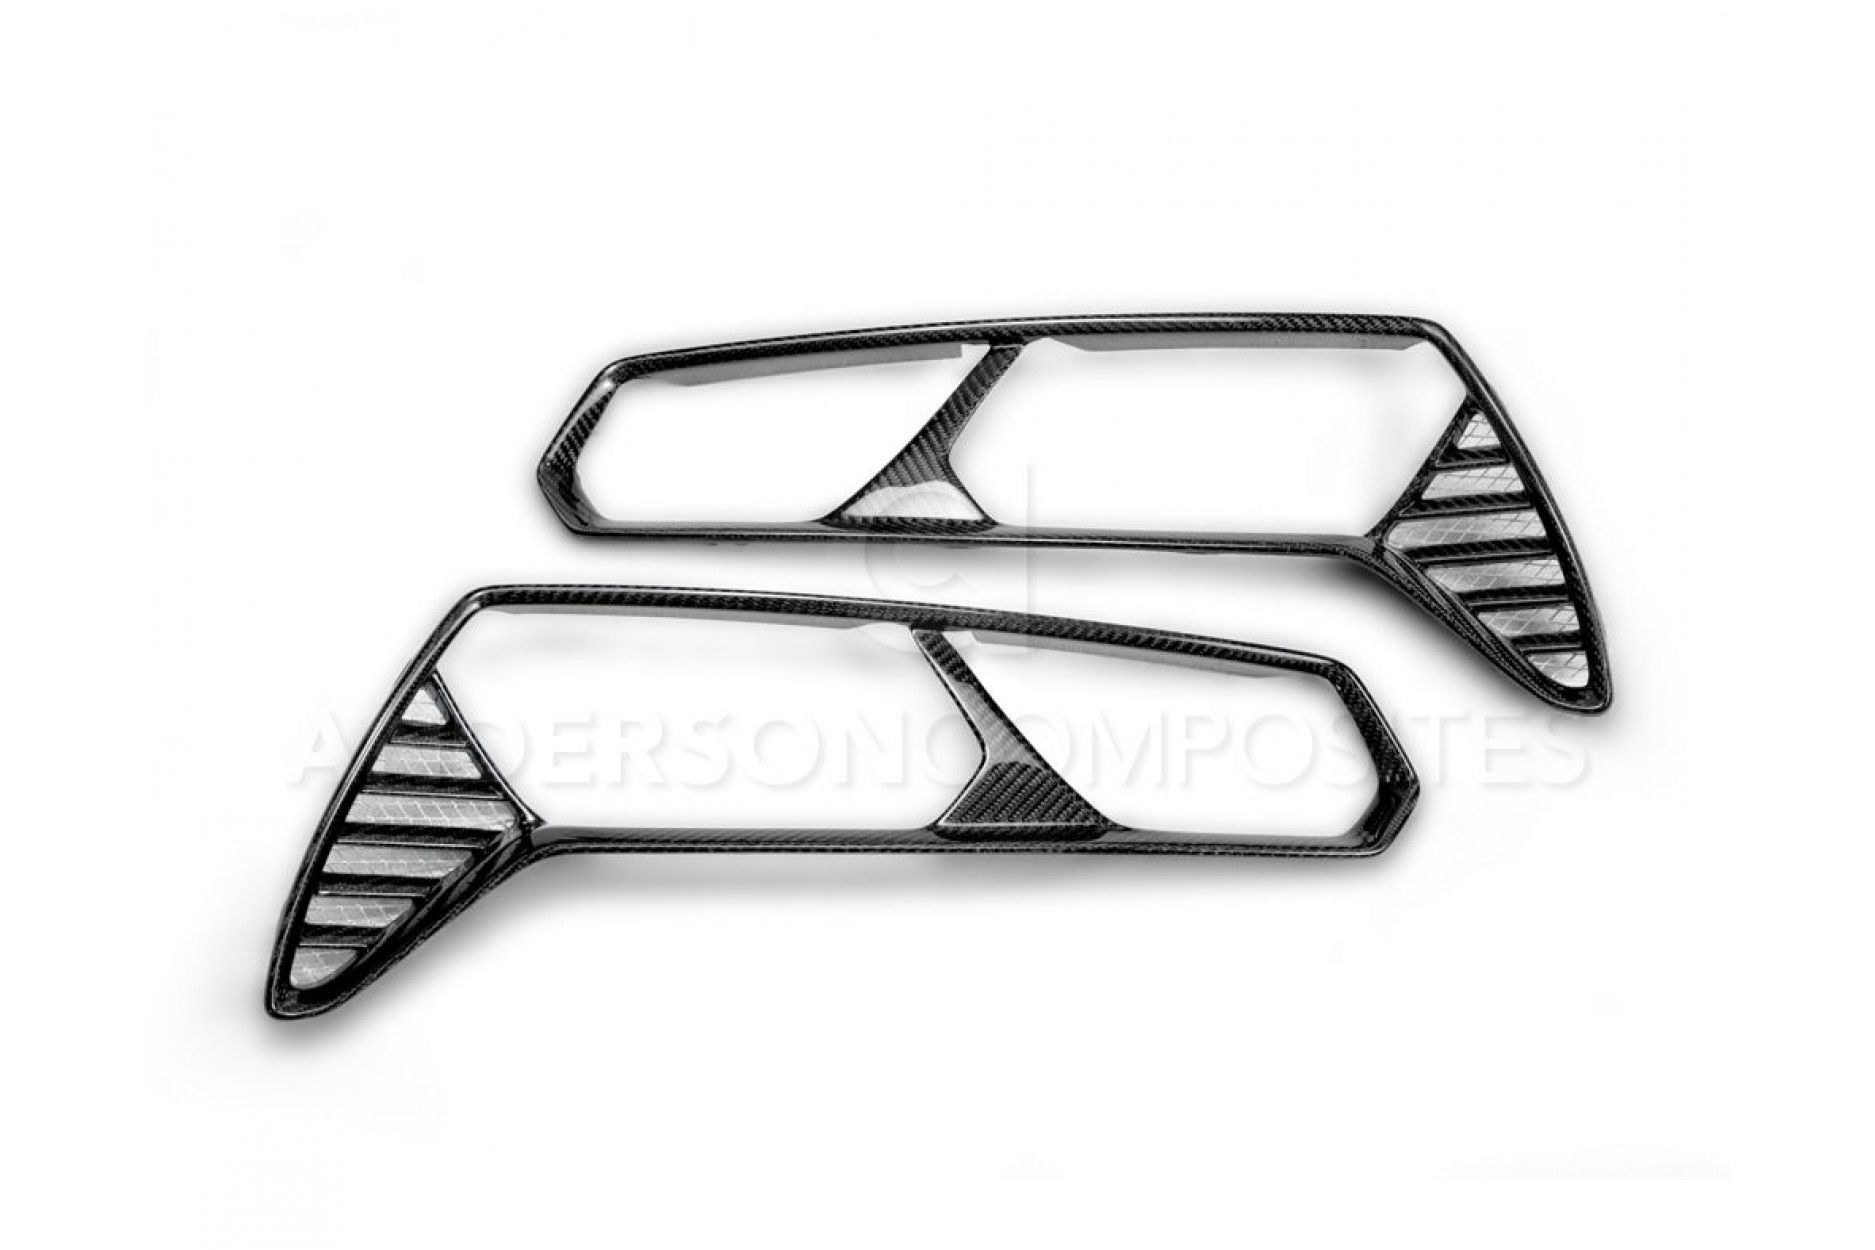 Anderson Composites Carbon fiber taillight bezels for 2014-2018 Chevrolet Corvette C7 Stingray/Z06 (2) 